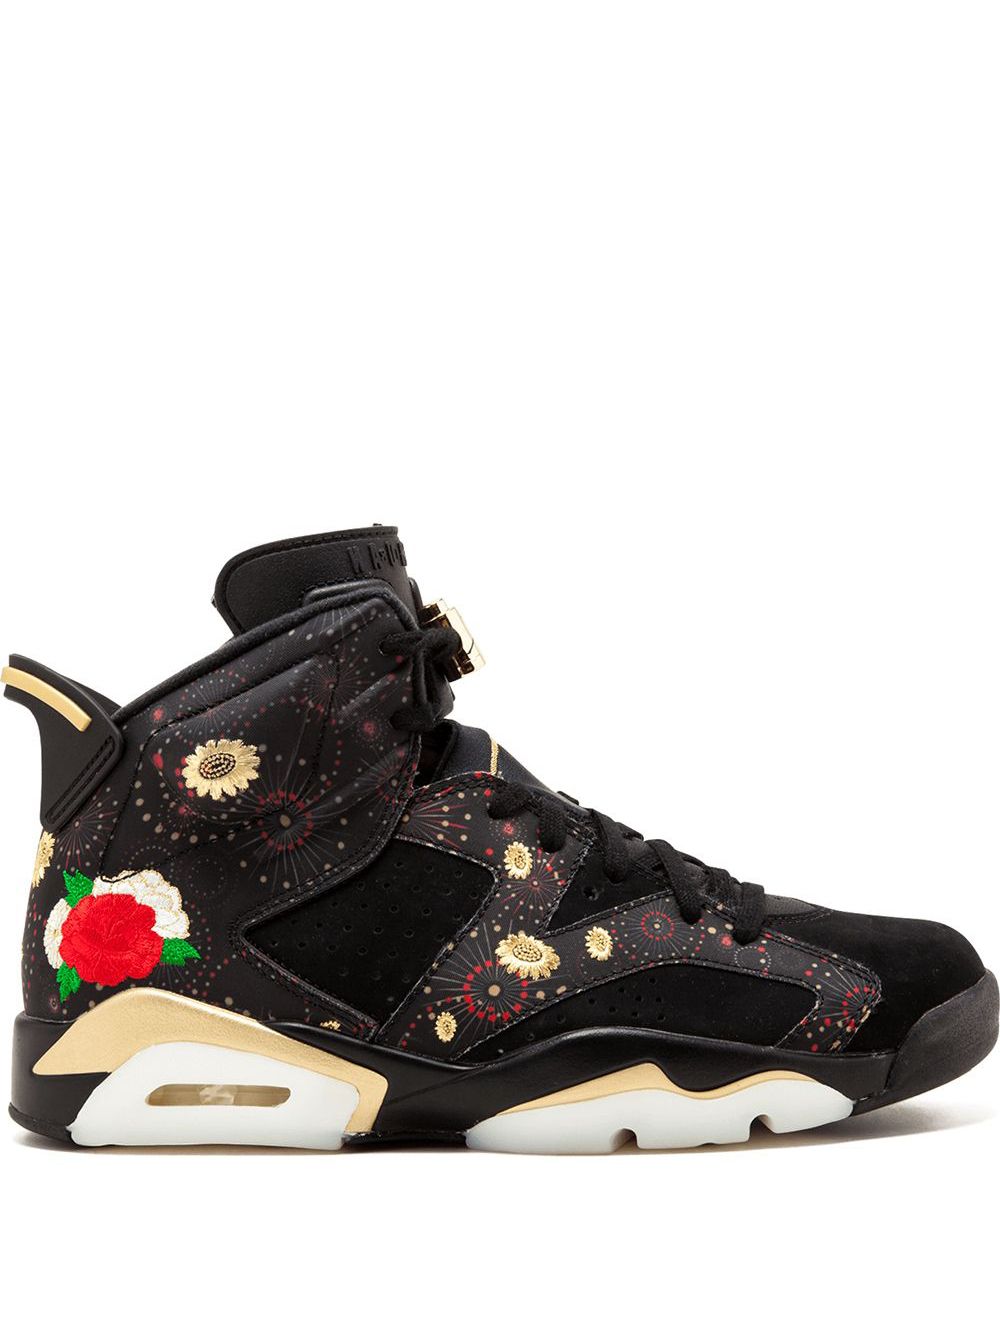 Jordan Air Jordan Retro 6 "Chinese New Year" sneakers - Black